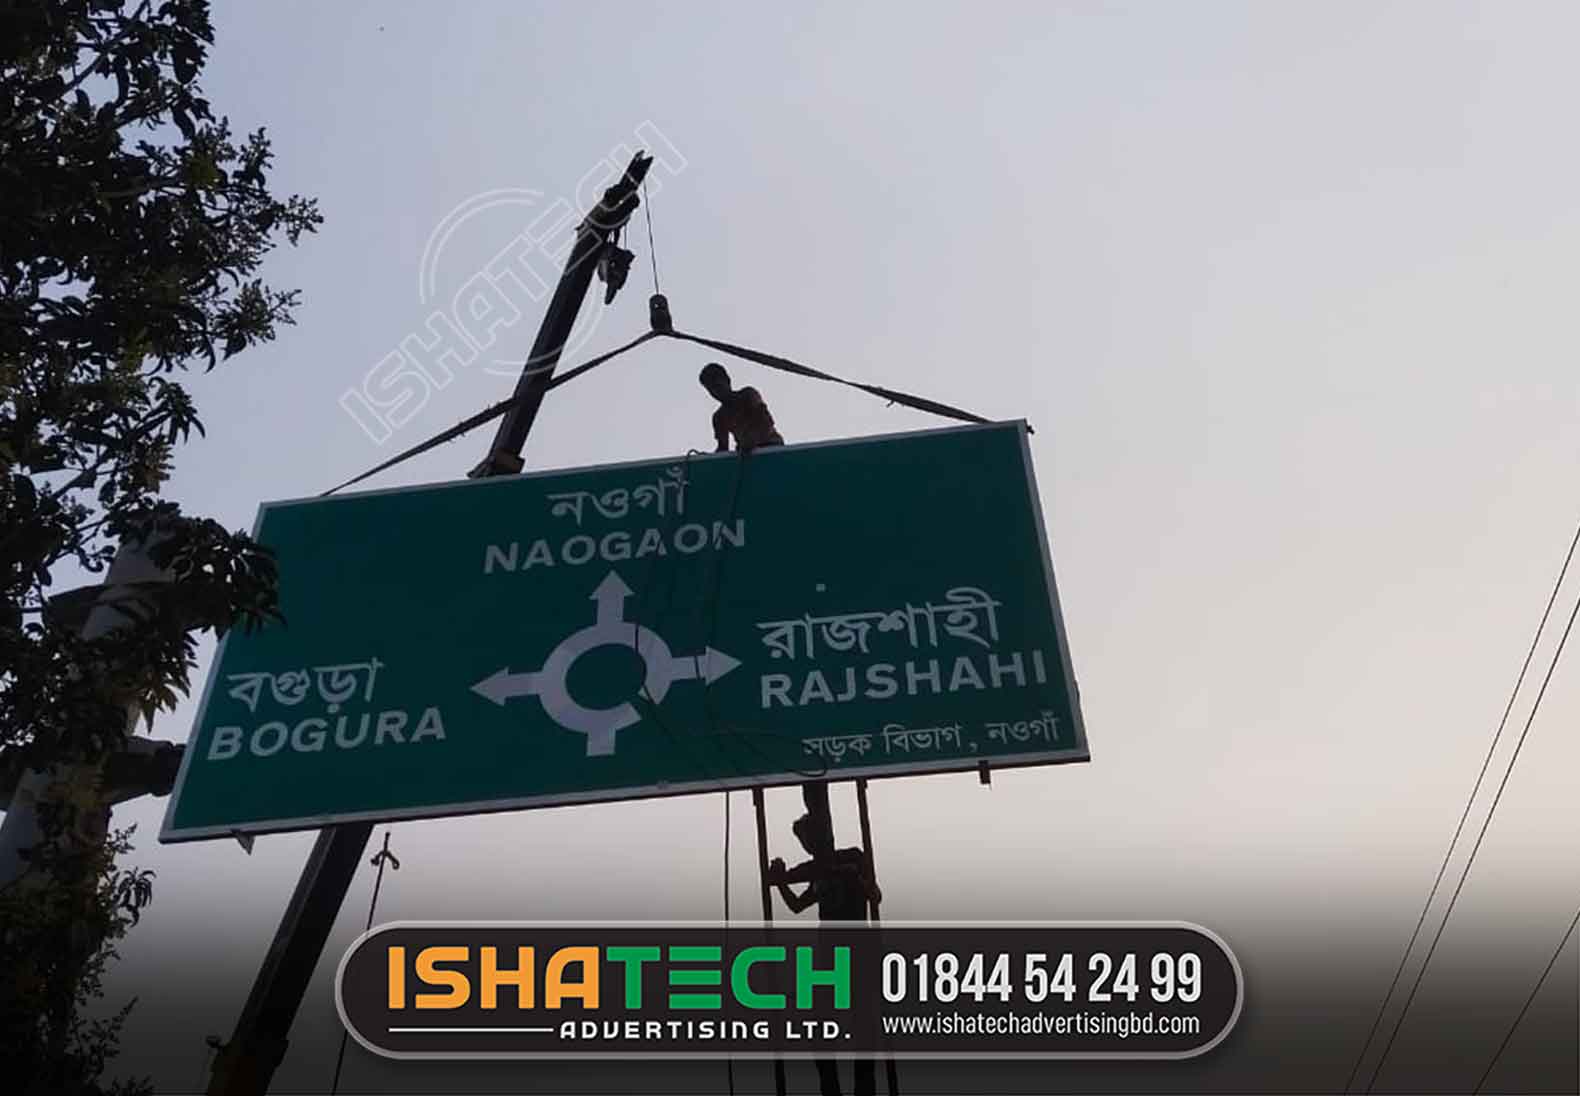 NAOGA, BAGURAM RAJSHAHI SIGNBOARD DIRECTIONAL AND SHIGNBOARD DHOP IN DHAKA, BANGLADESH